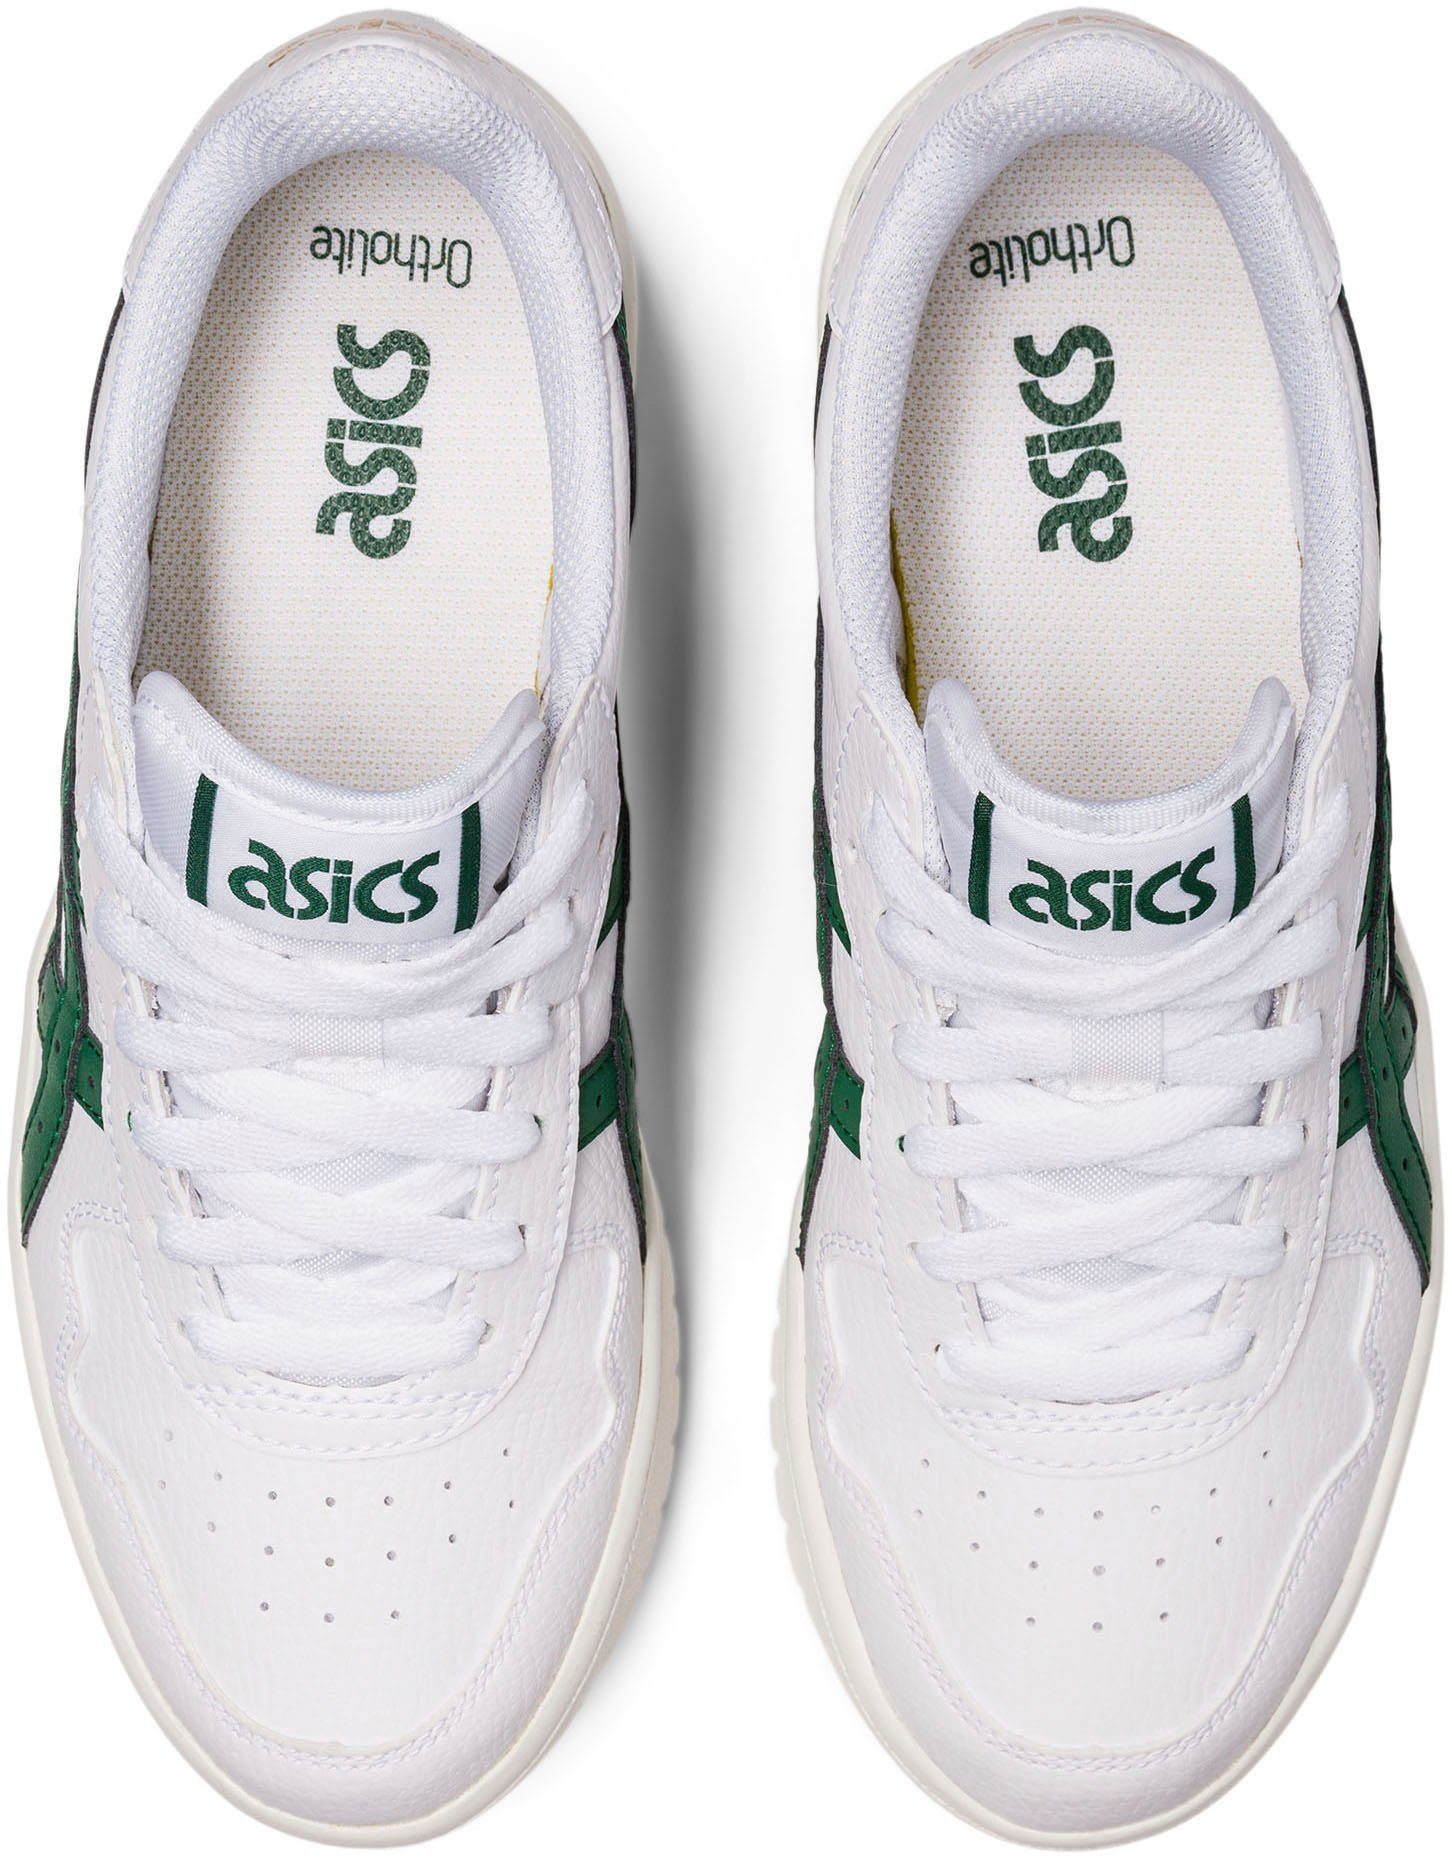 ASICS SportStyle JAPAN S Sneaker PF weiß-grün